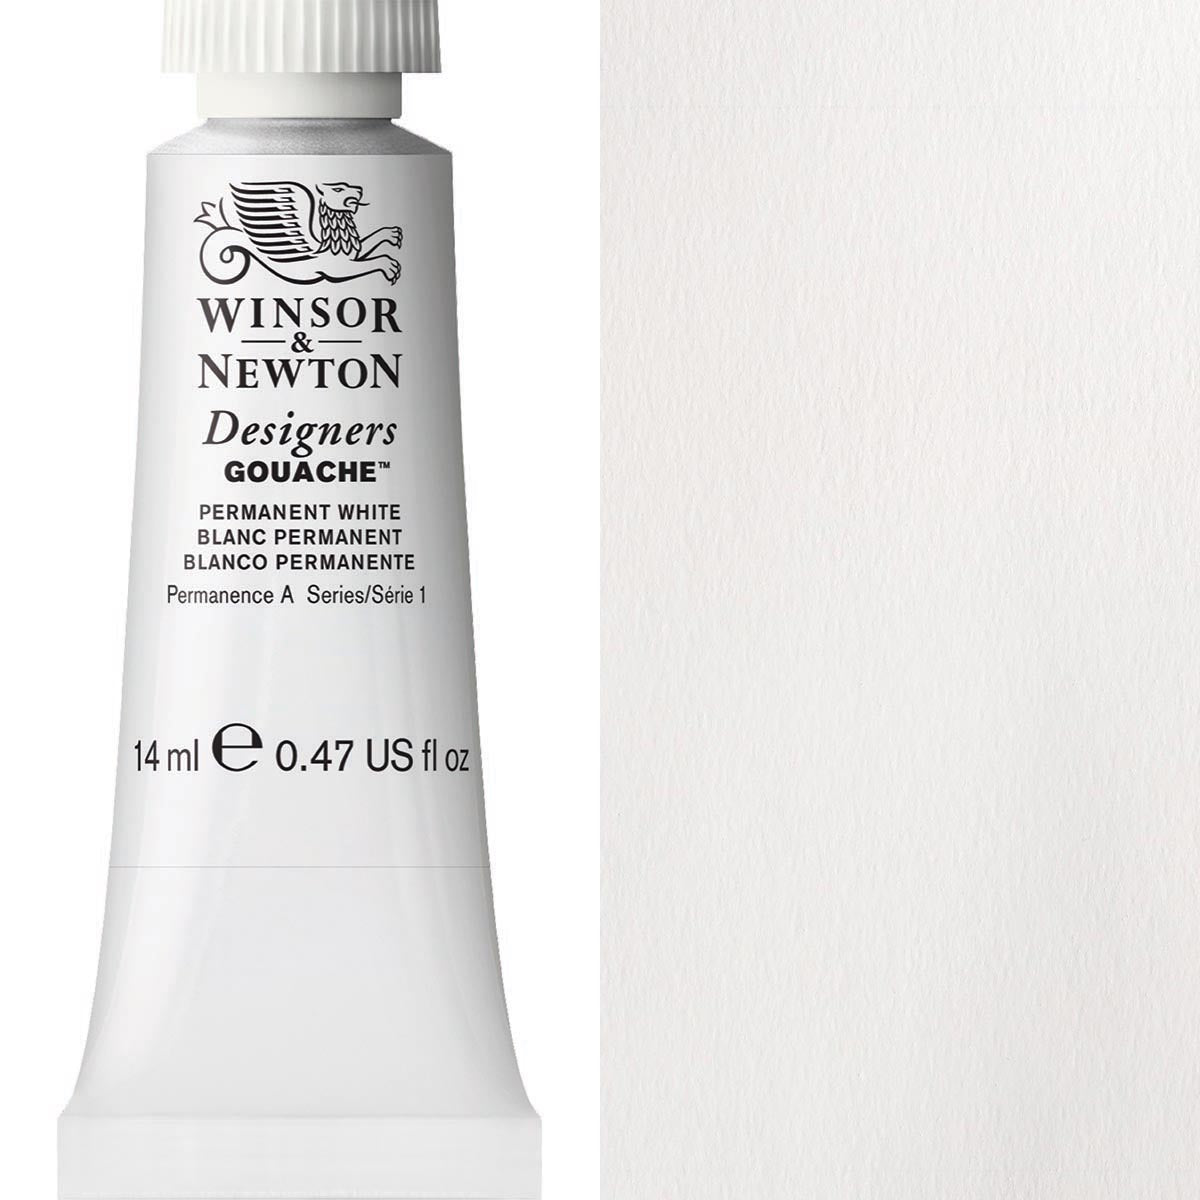 Winsor and Newton - Designers Gouache - 14ml - Permanent White